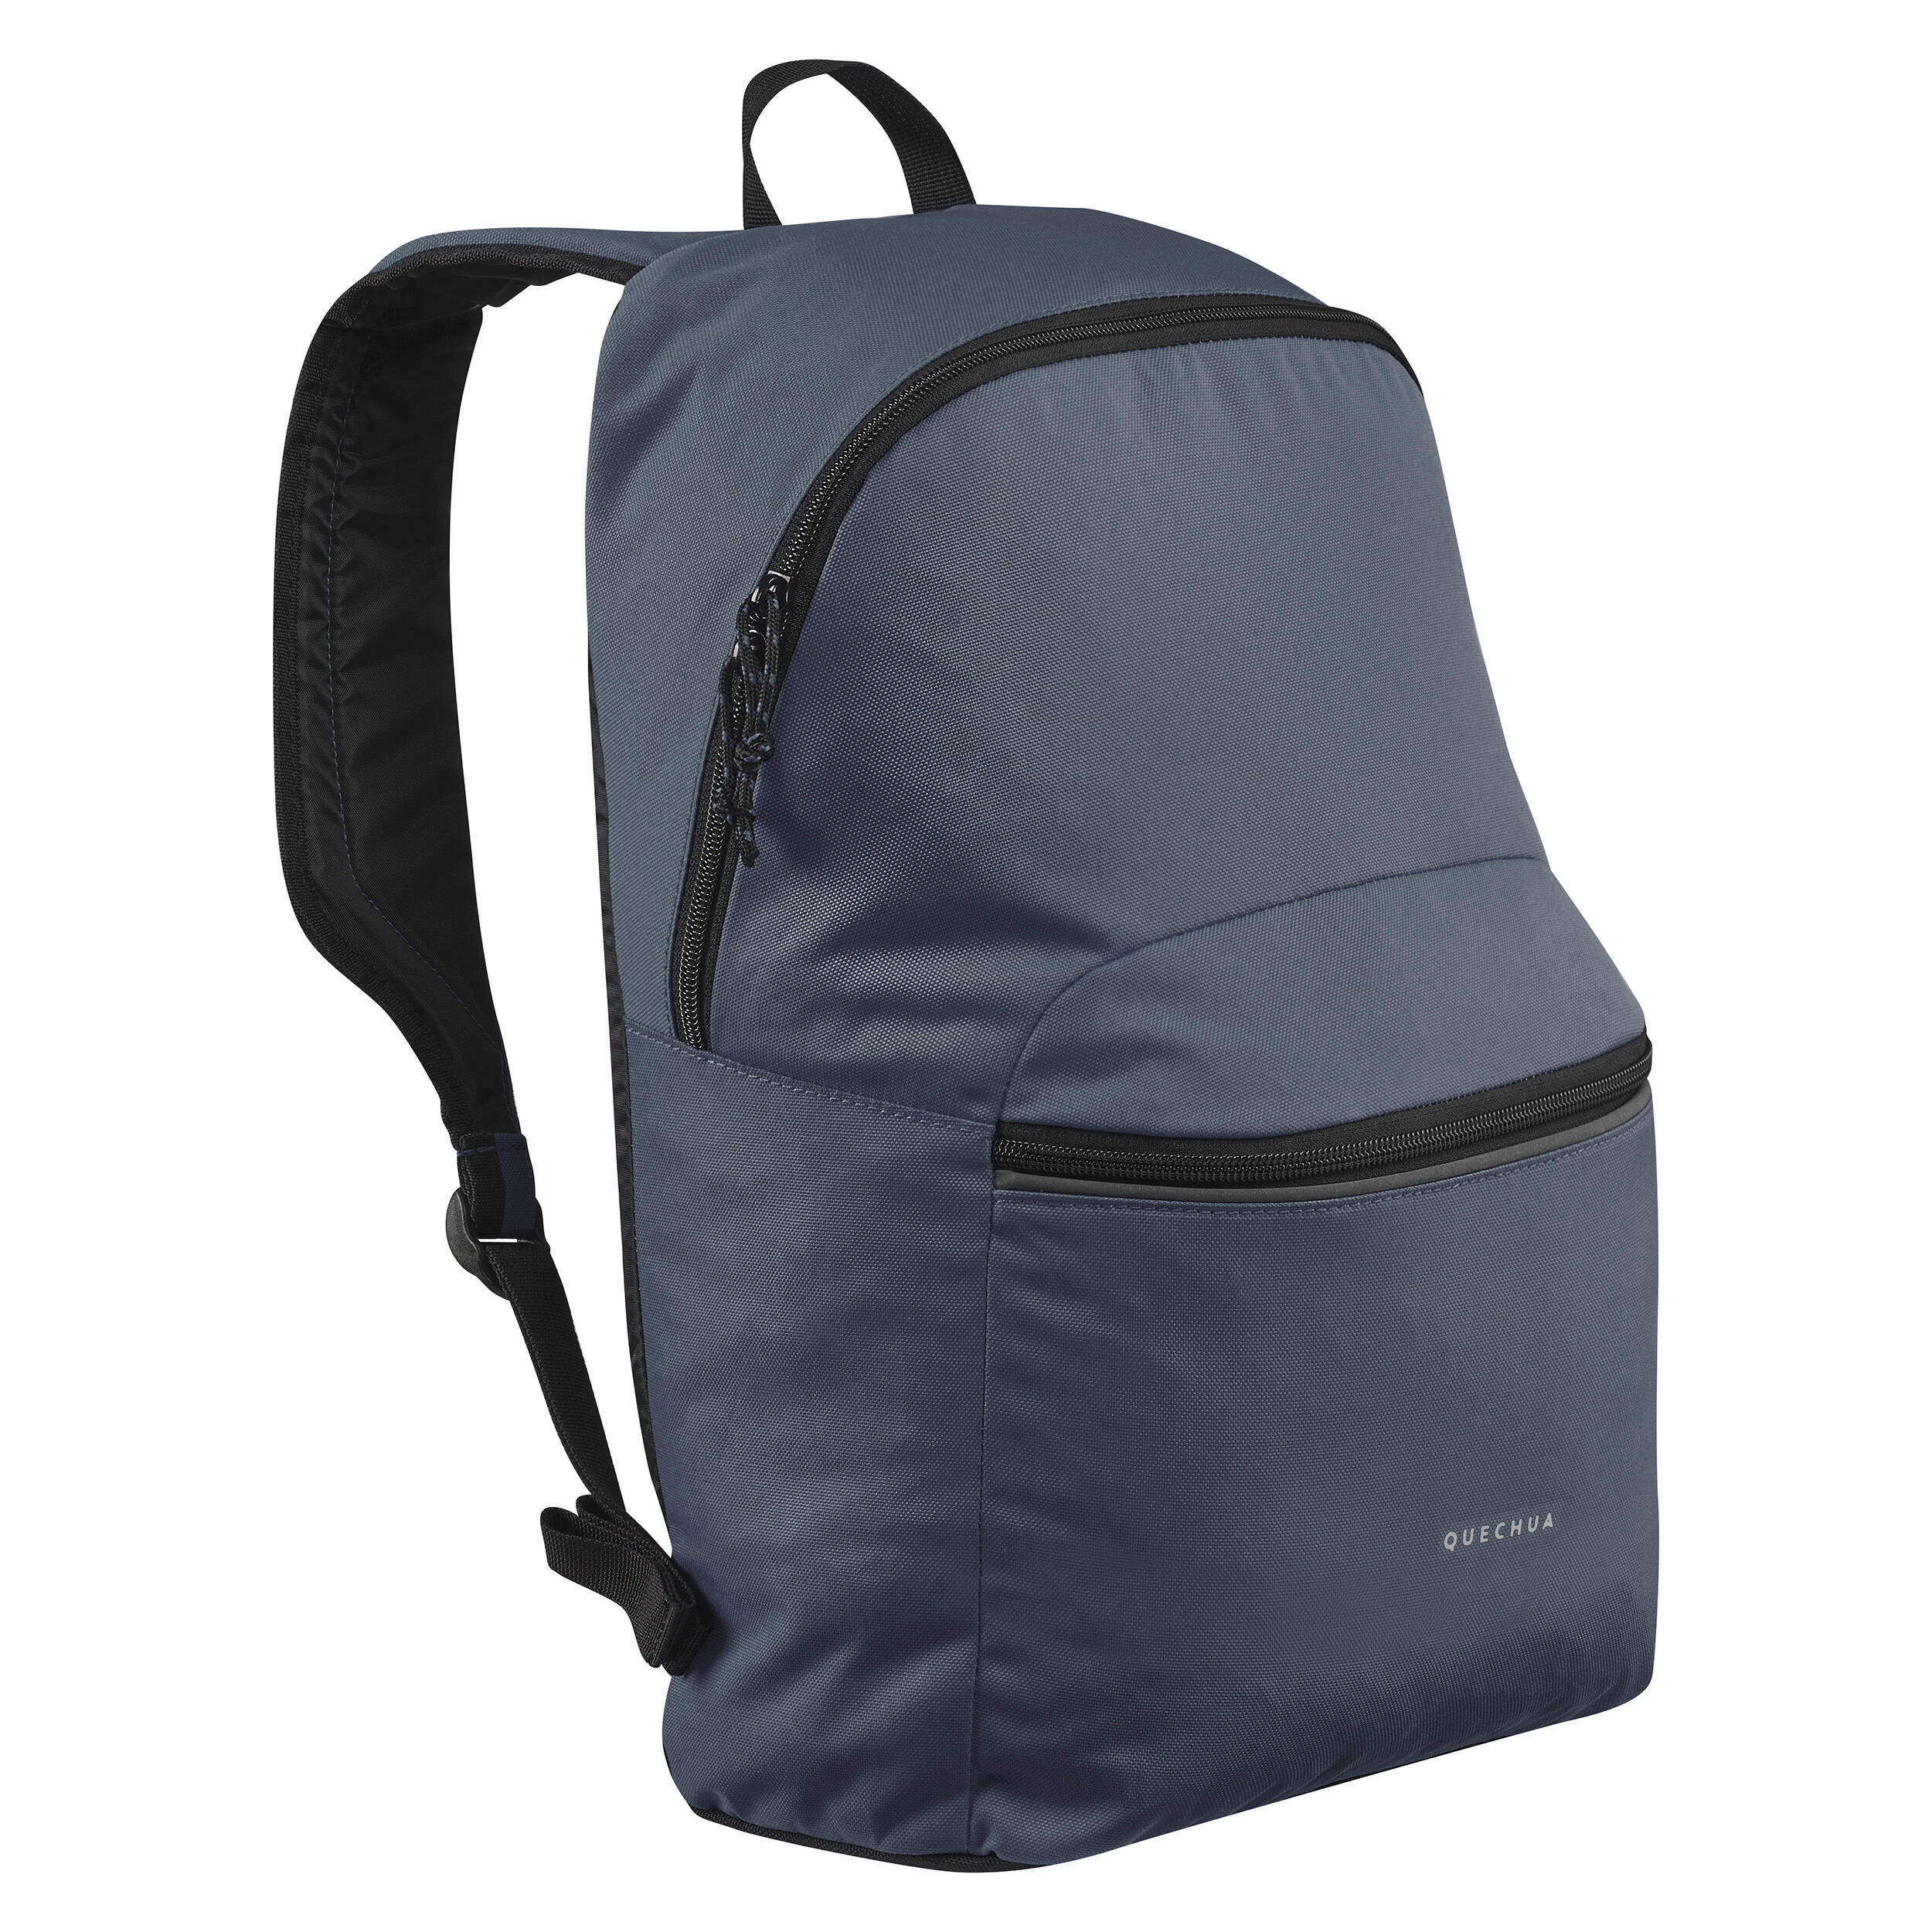 Promotional Backpacks, Personalized Backpacks | VistaPrint